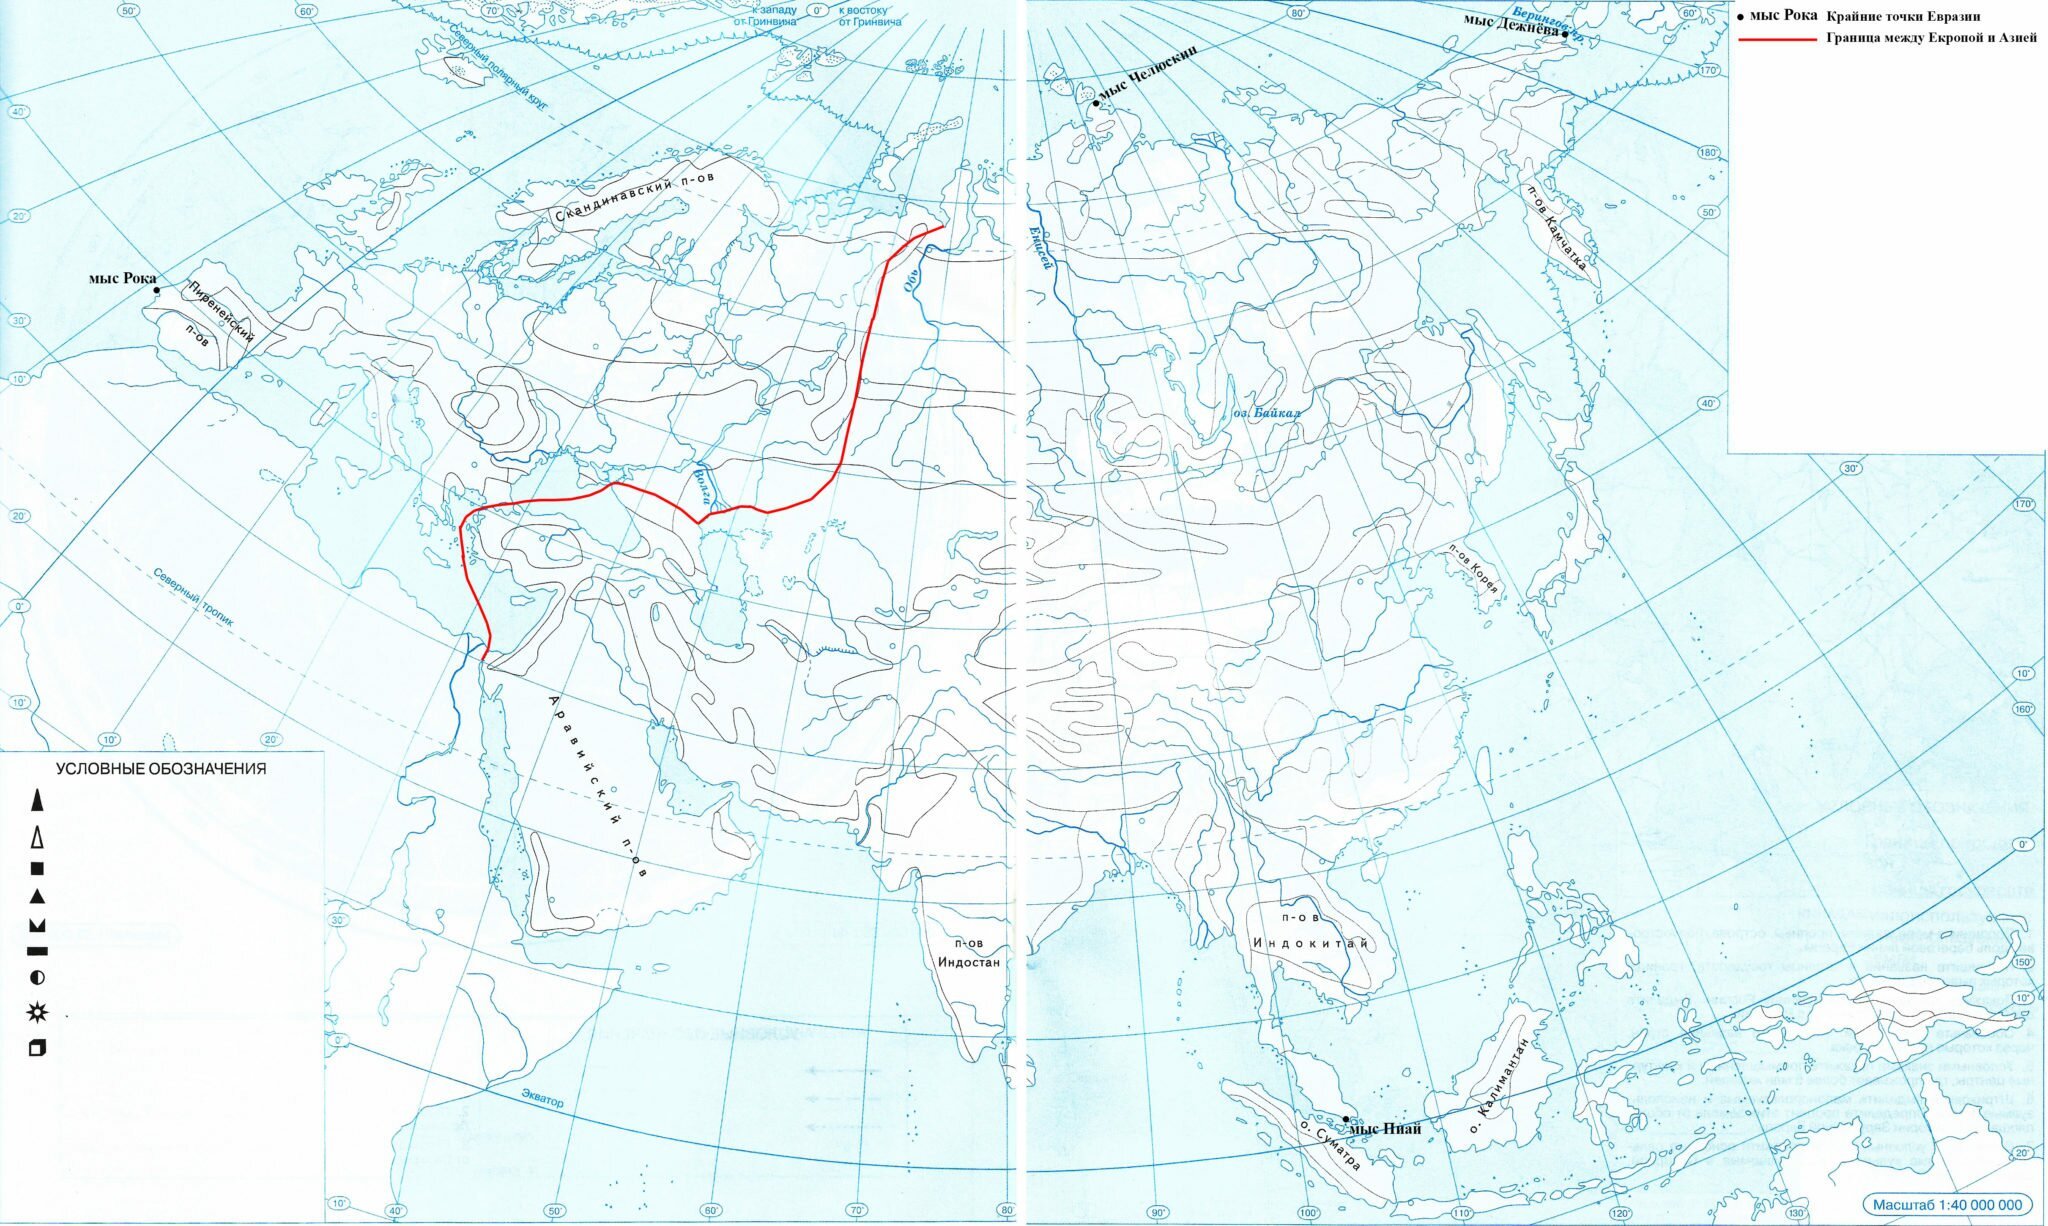 Полуострова и заливы евразии. Полуострова Евразии. Реки Евразии на карте. Острова и полуострова Евразии. Моря и полуострова Евразии.